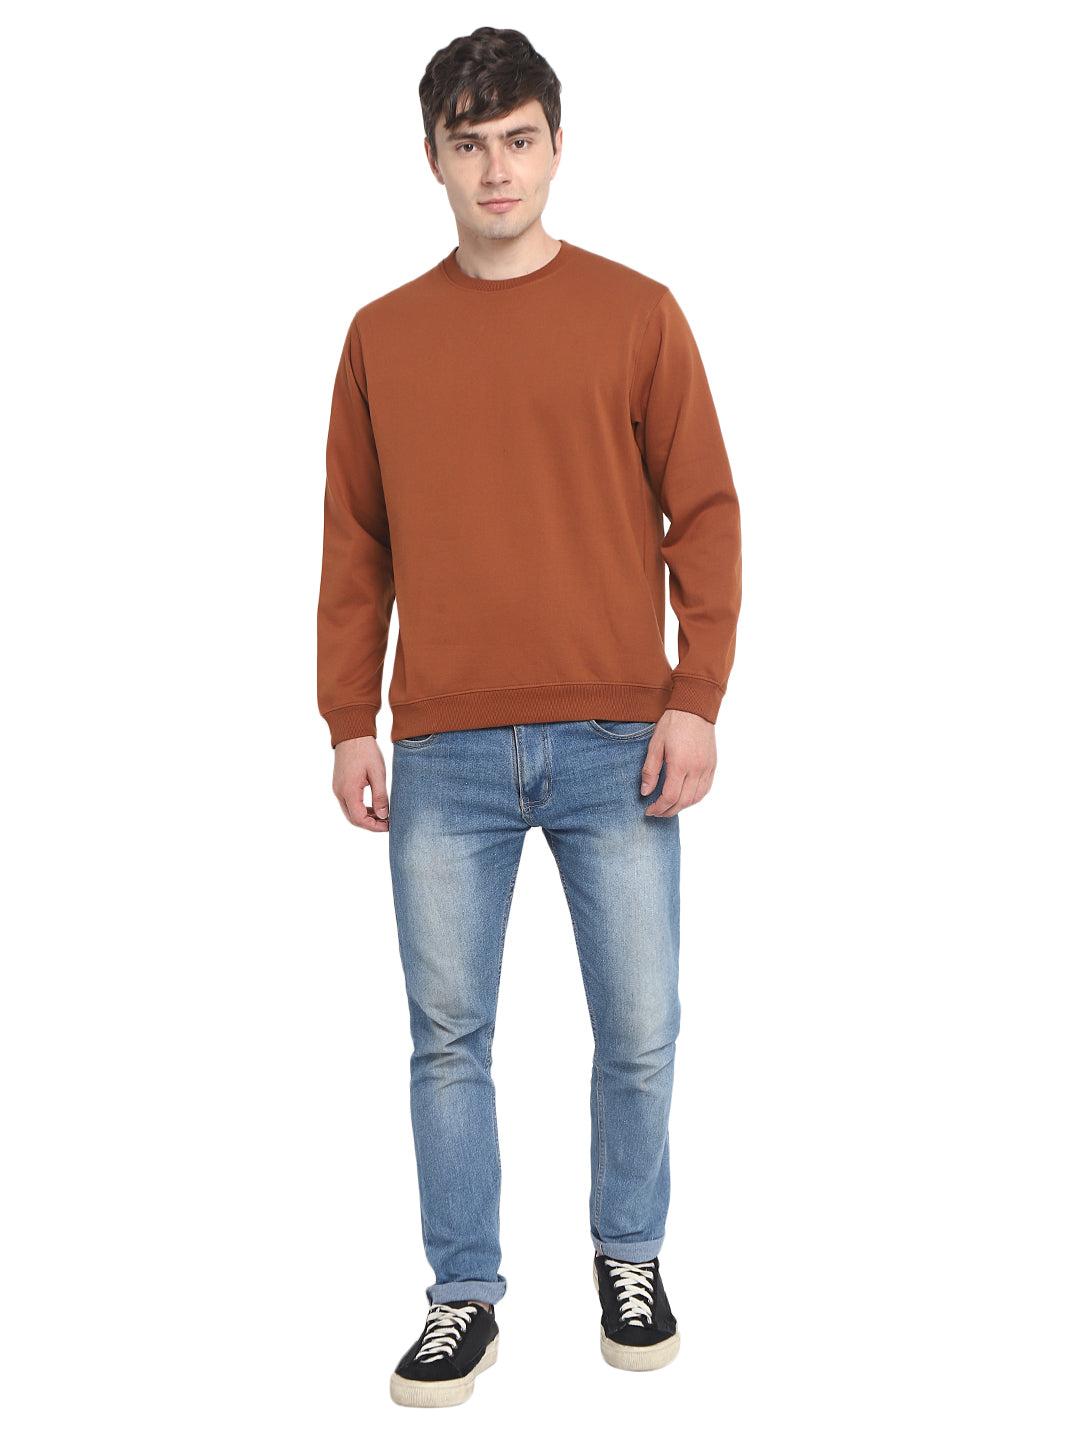 Round Neck Sweatshirt For Men - Caramel Cafe